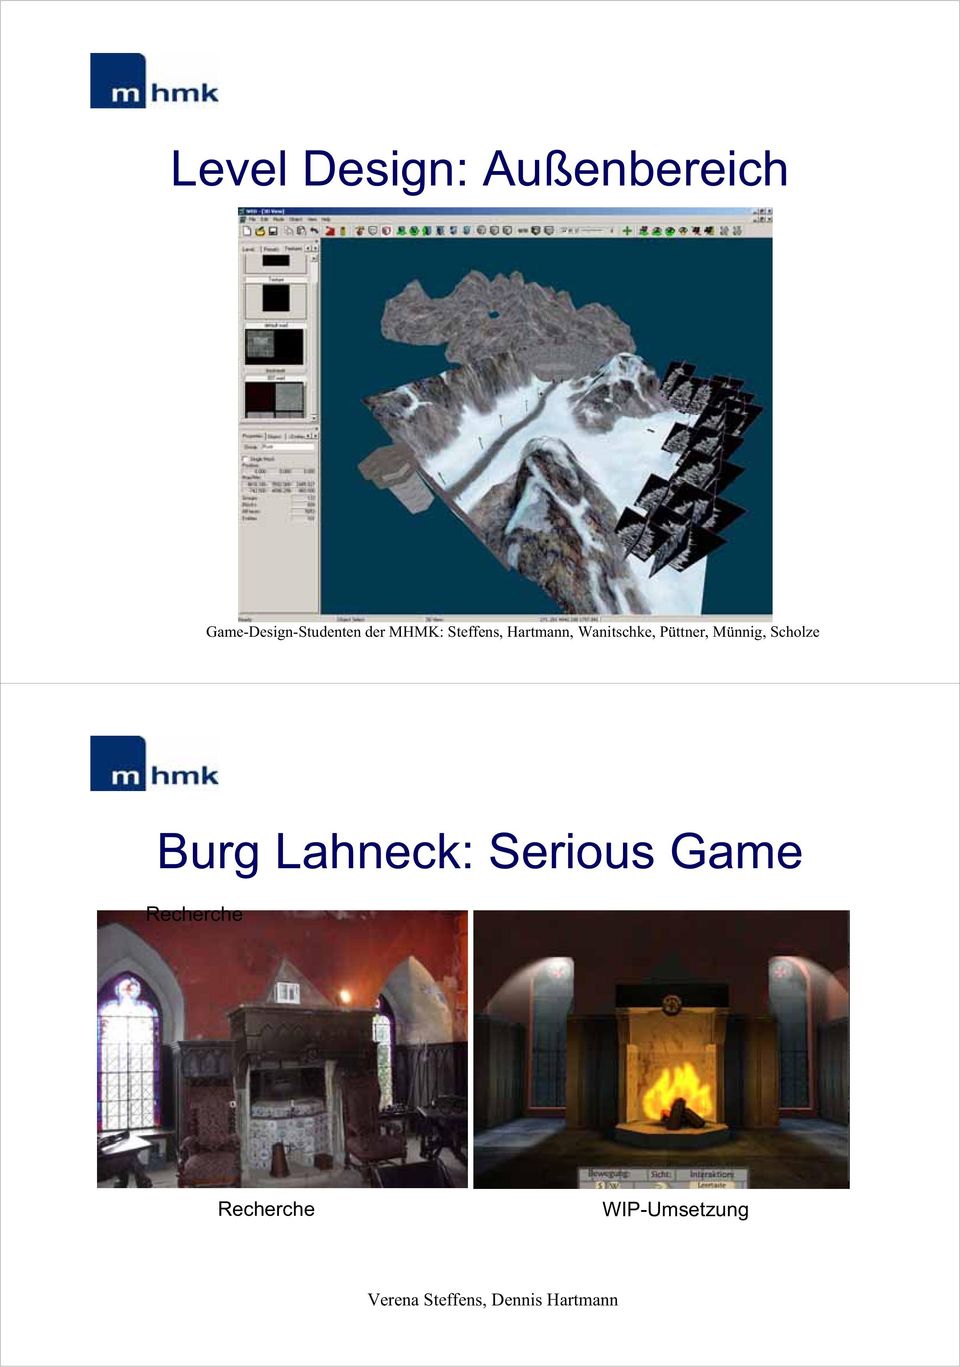 Münnig, Scholze Burg Lahneck: Serious Game Recherche